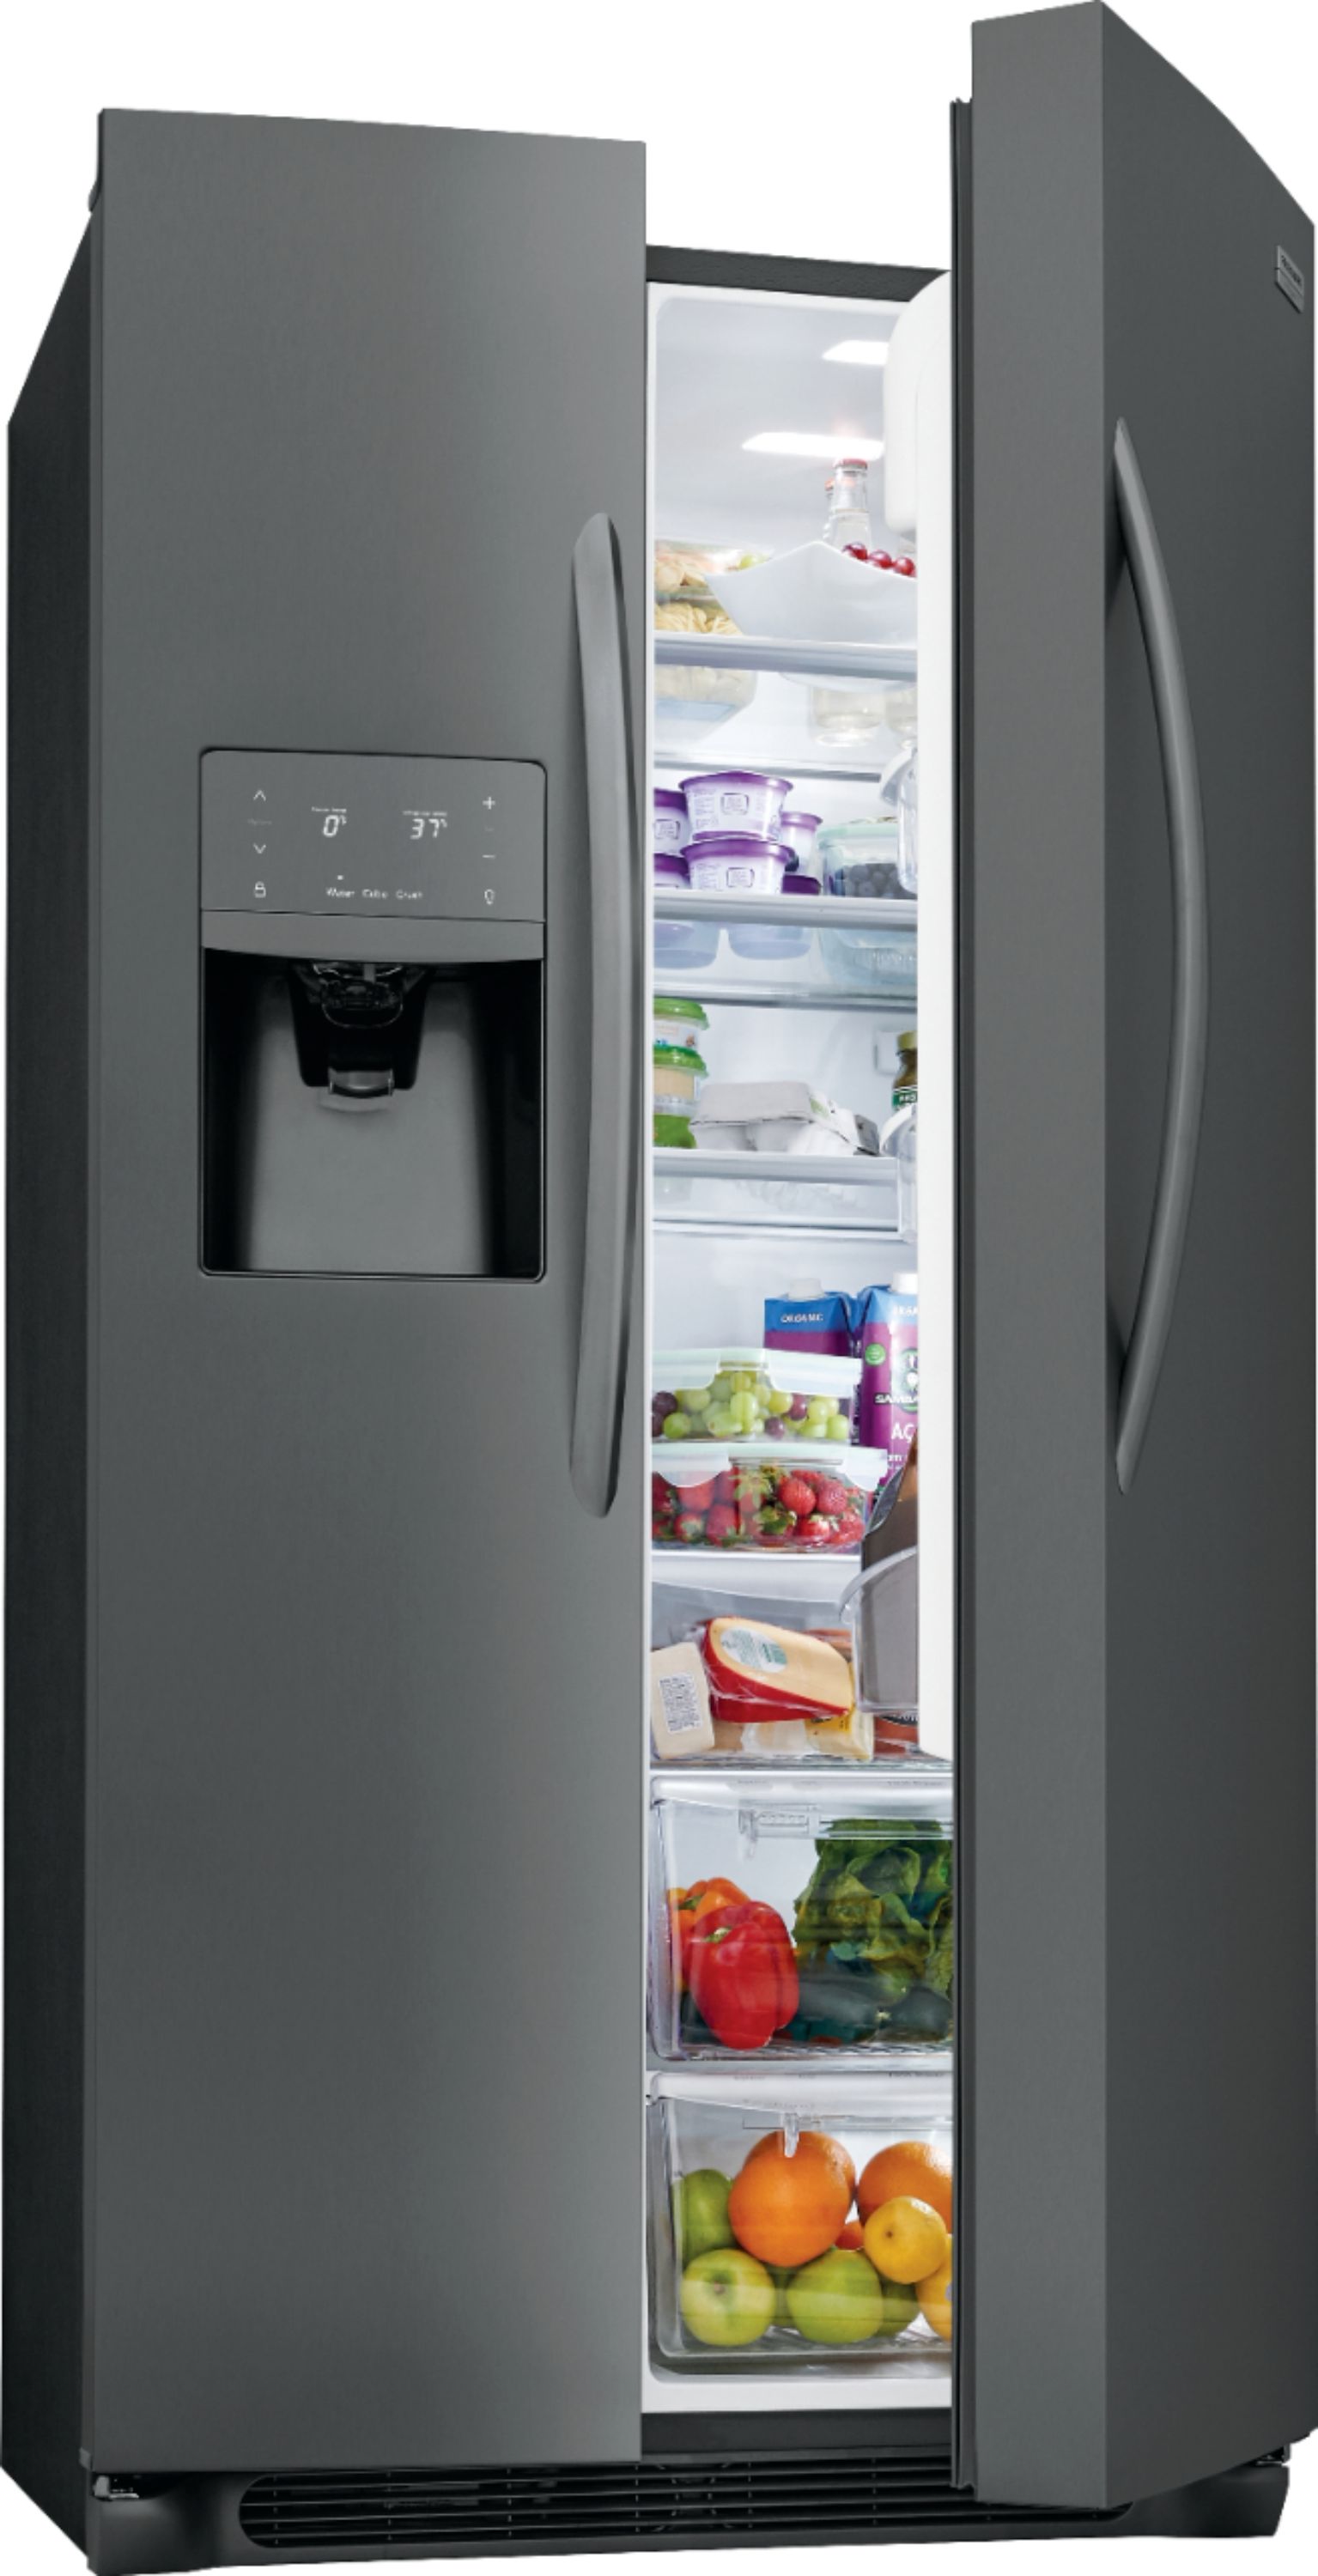 Best Buy: Frigidaire Gallery 25.6 Cu. Ft. Side-by-Side Refrigerator Best Buy Refrigerators Stainless Steel